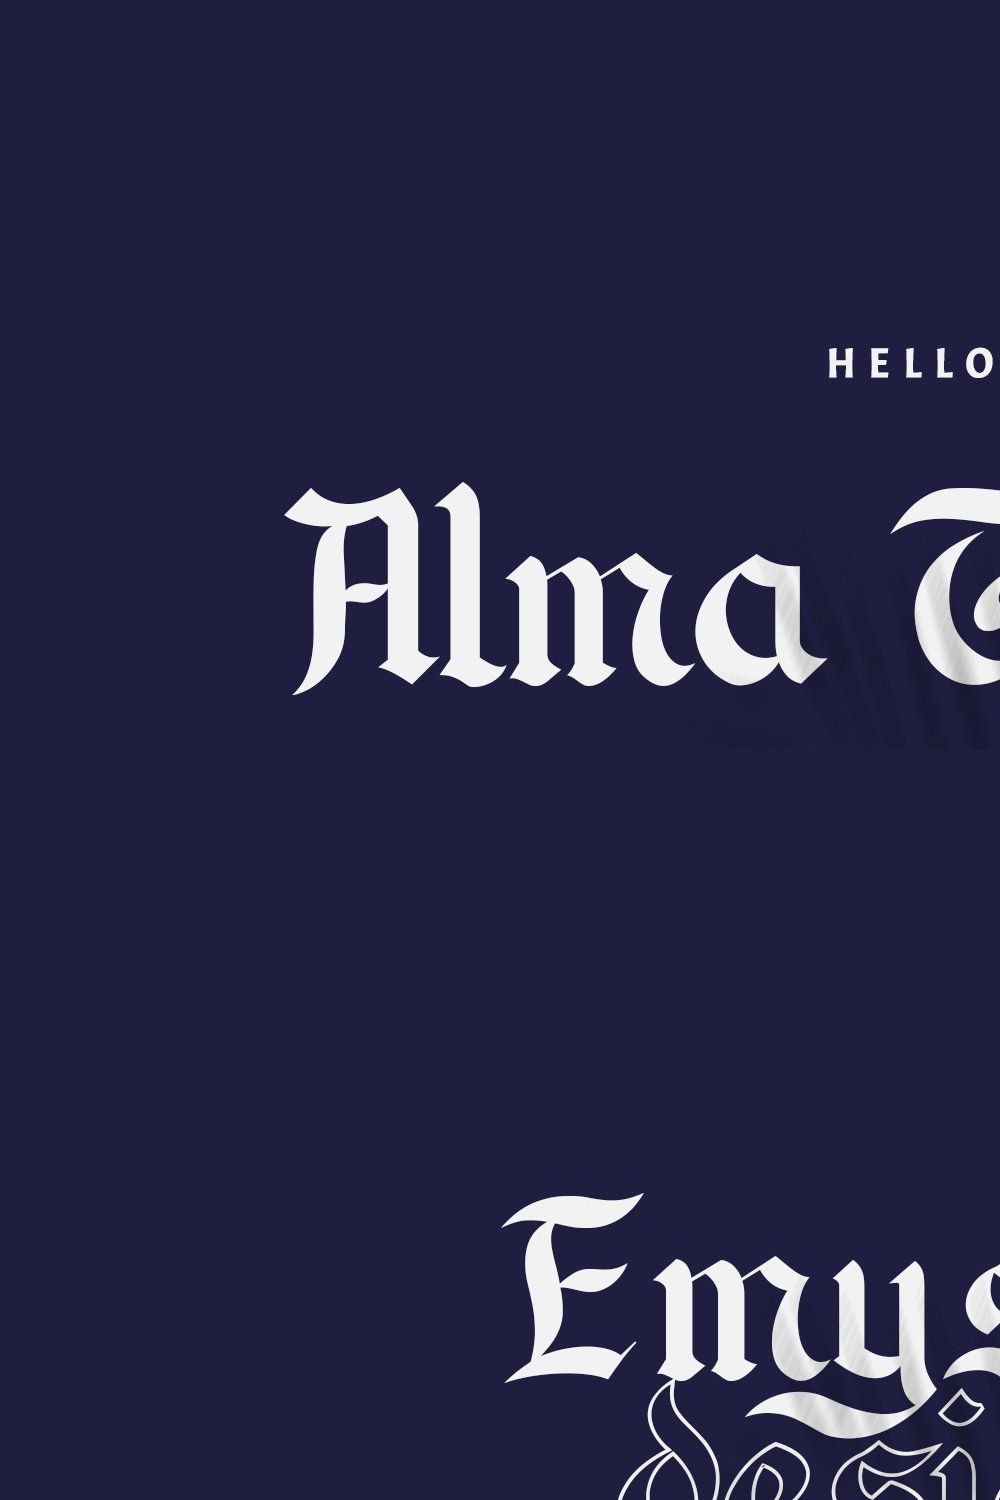 Alma Toran Typeface pinterest preview image.